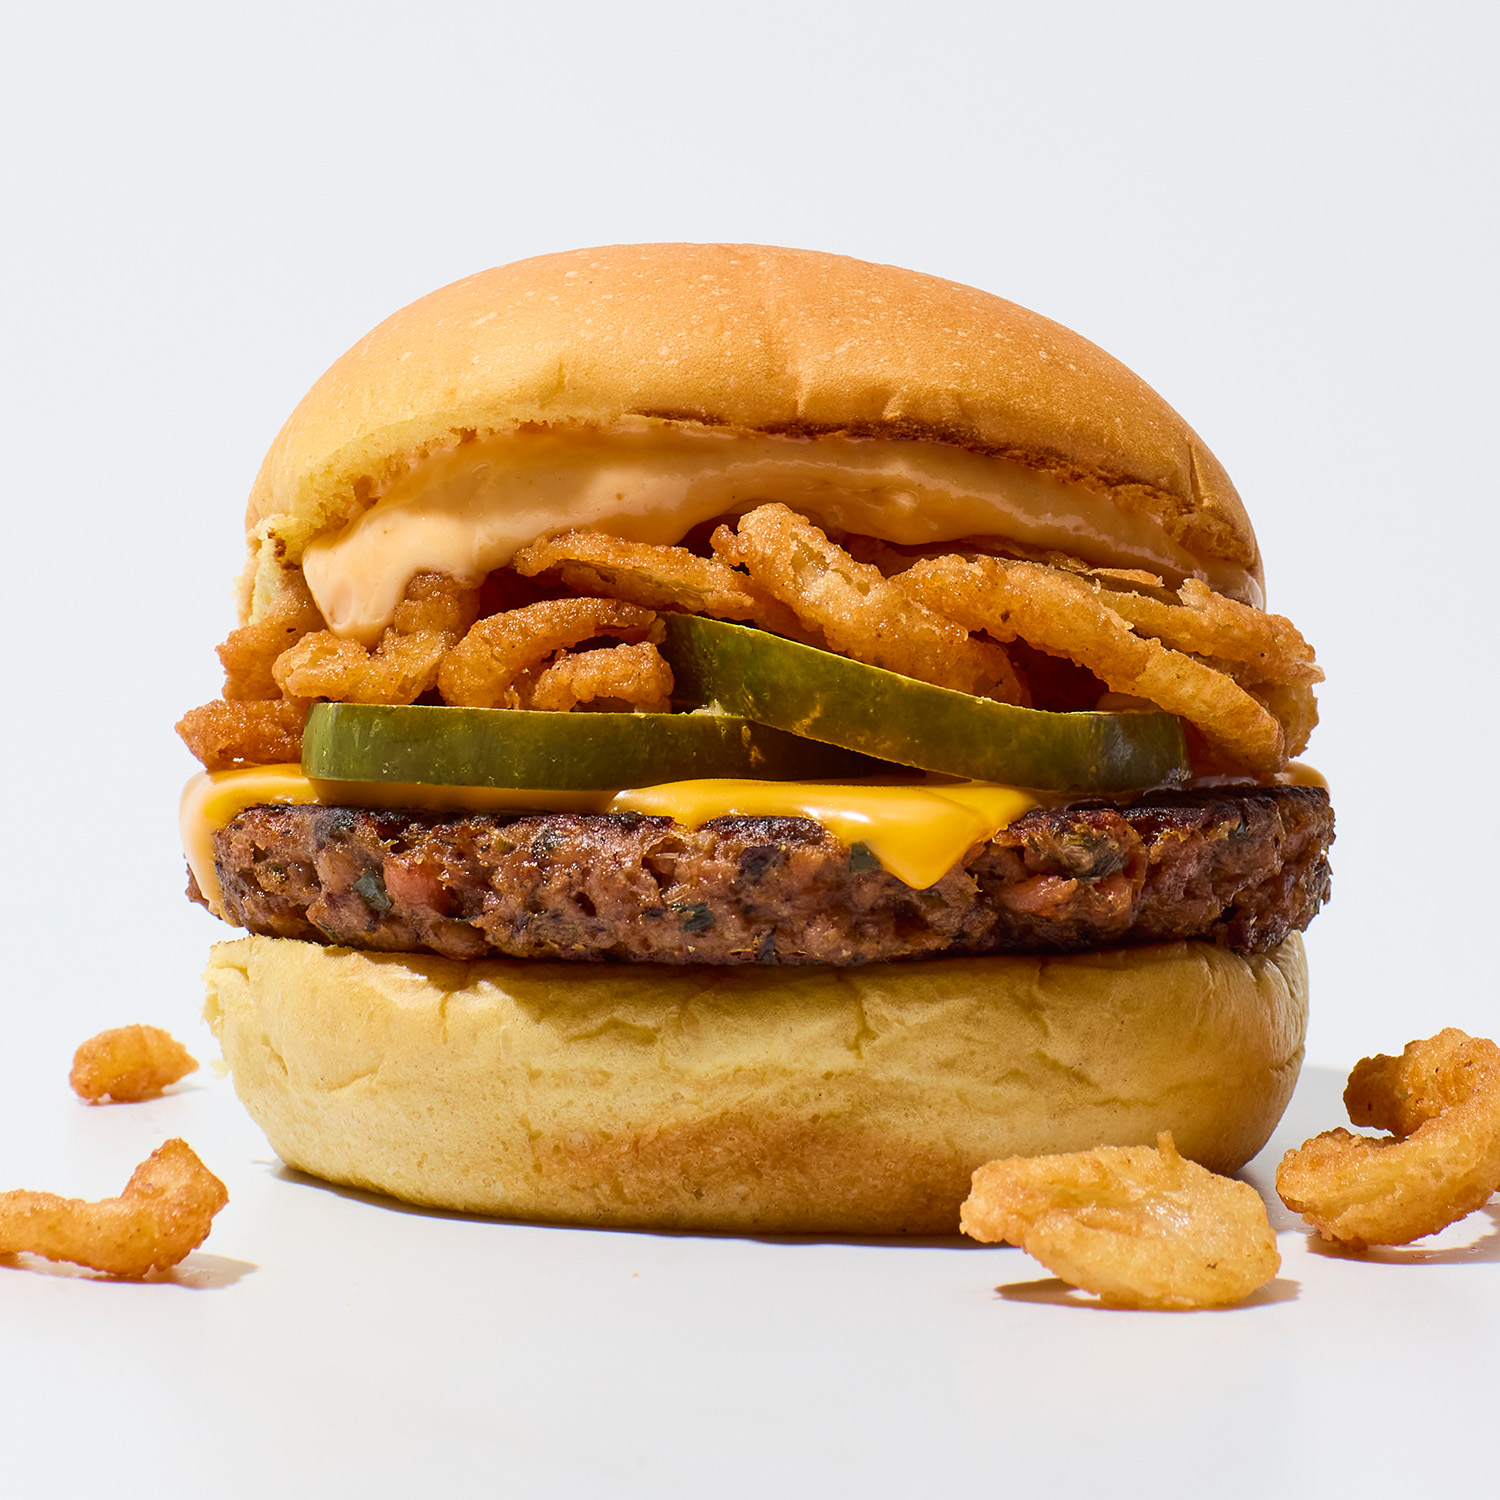 Veggie Shack Burger from Shake Shack